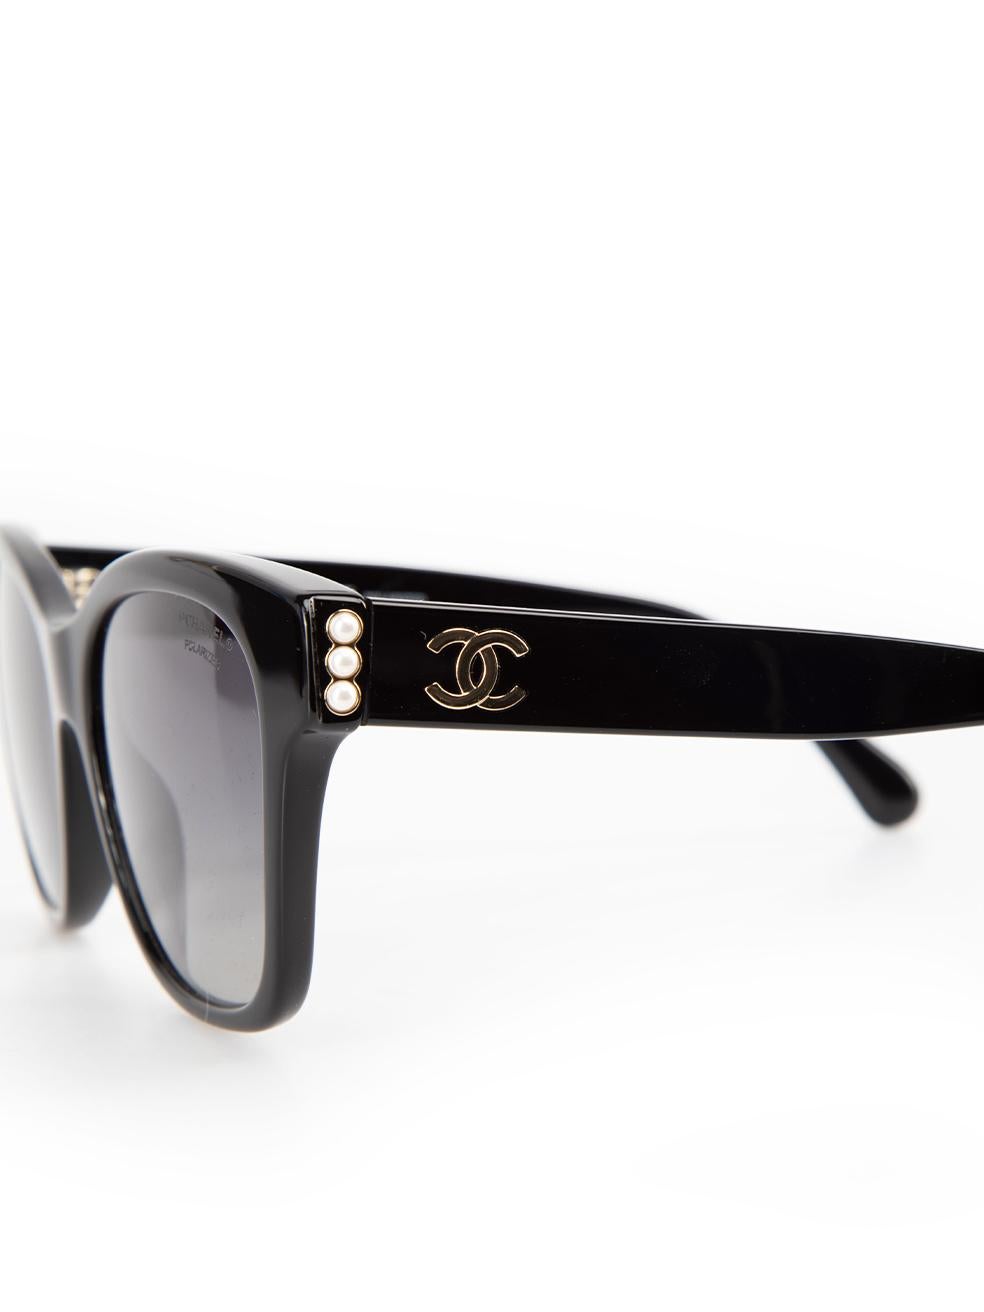 Chanel Black Square Wayfarer Sunglasses For Sale 2